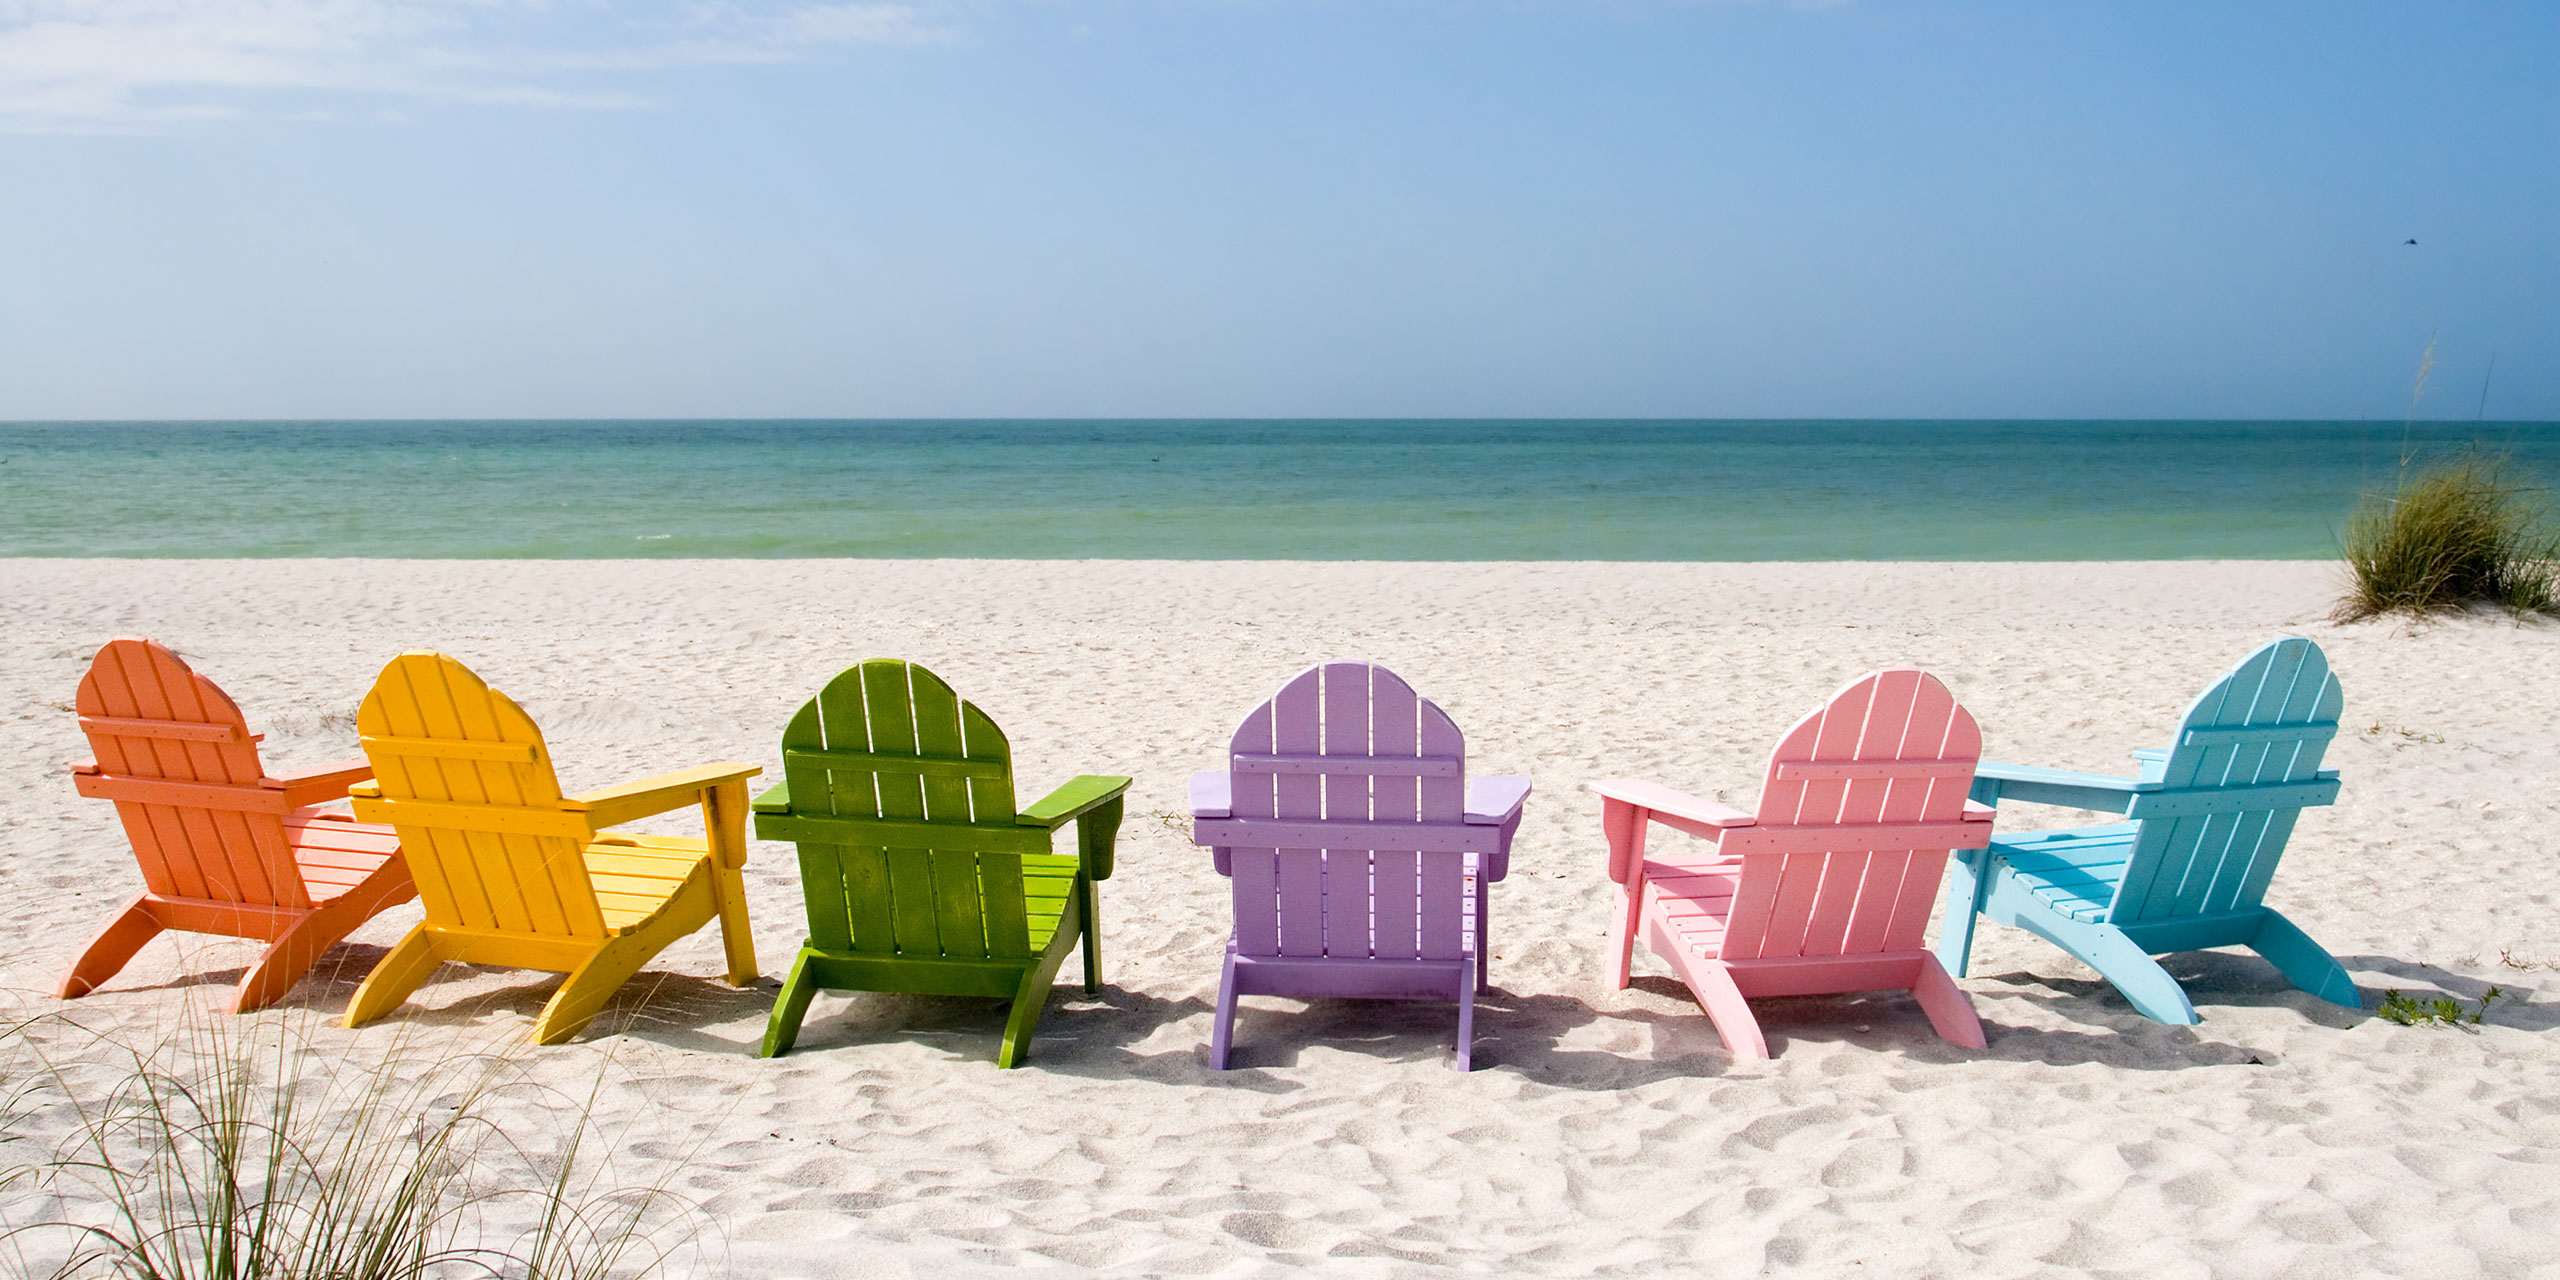 Captiva Beach, Florida; Courtesy of Chad McDermott/Shutterstock.com